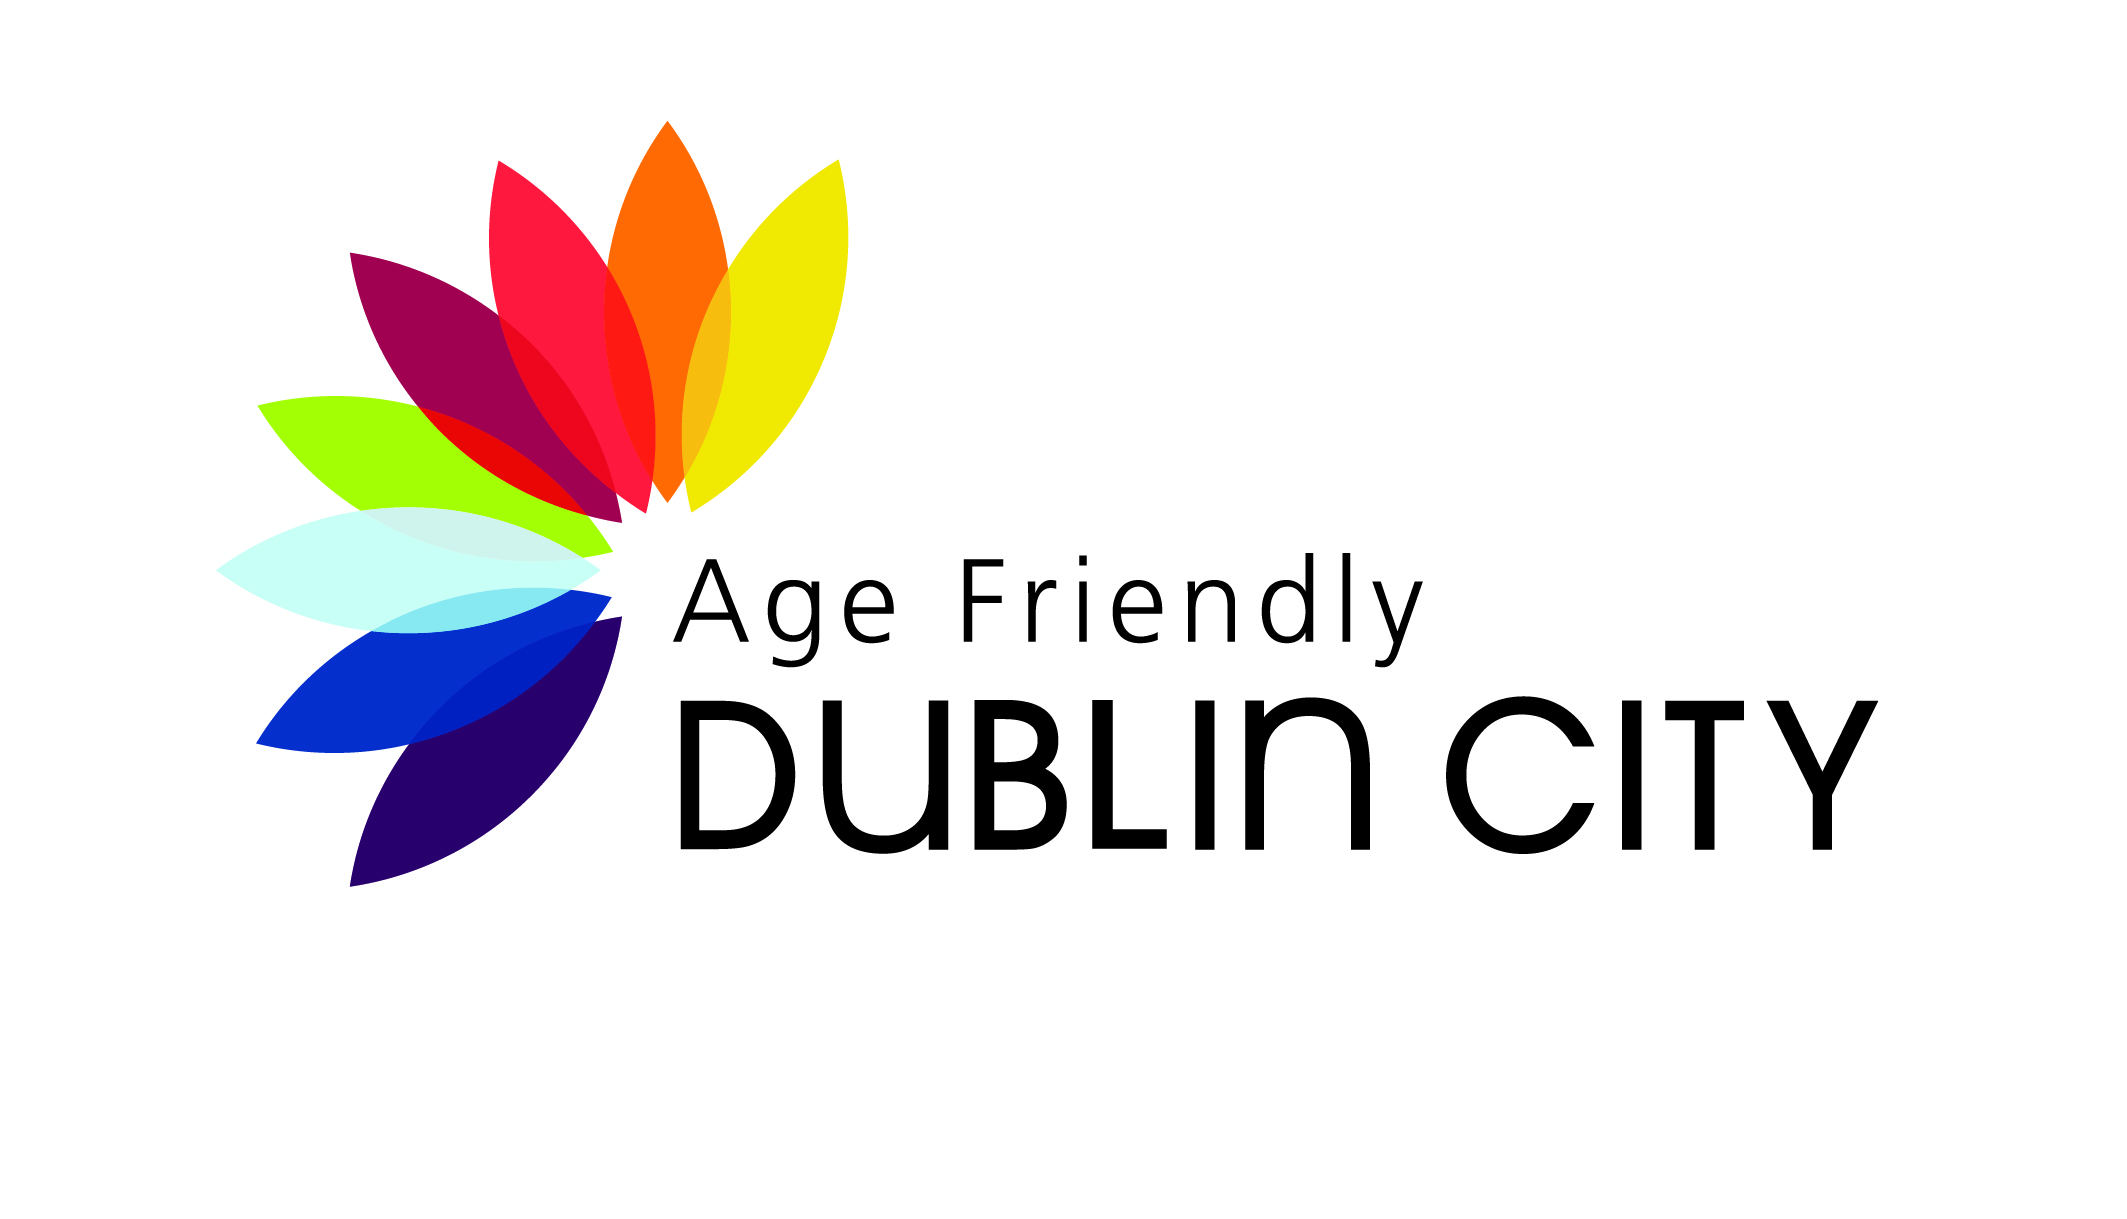 Dublin City Council - Age Friendly - HSE